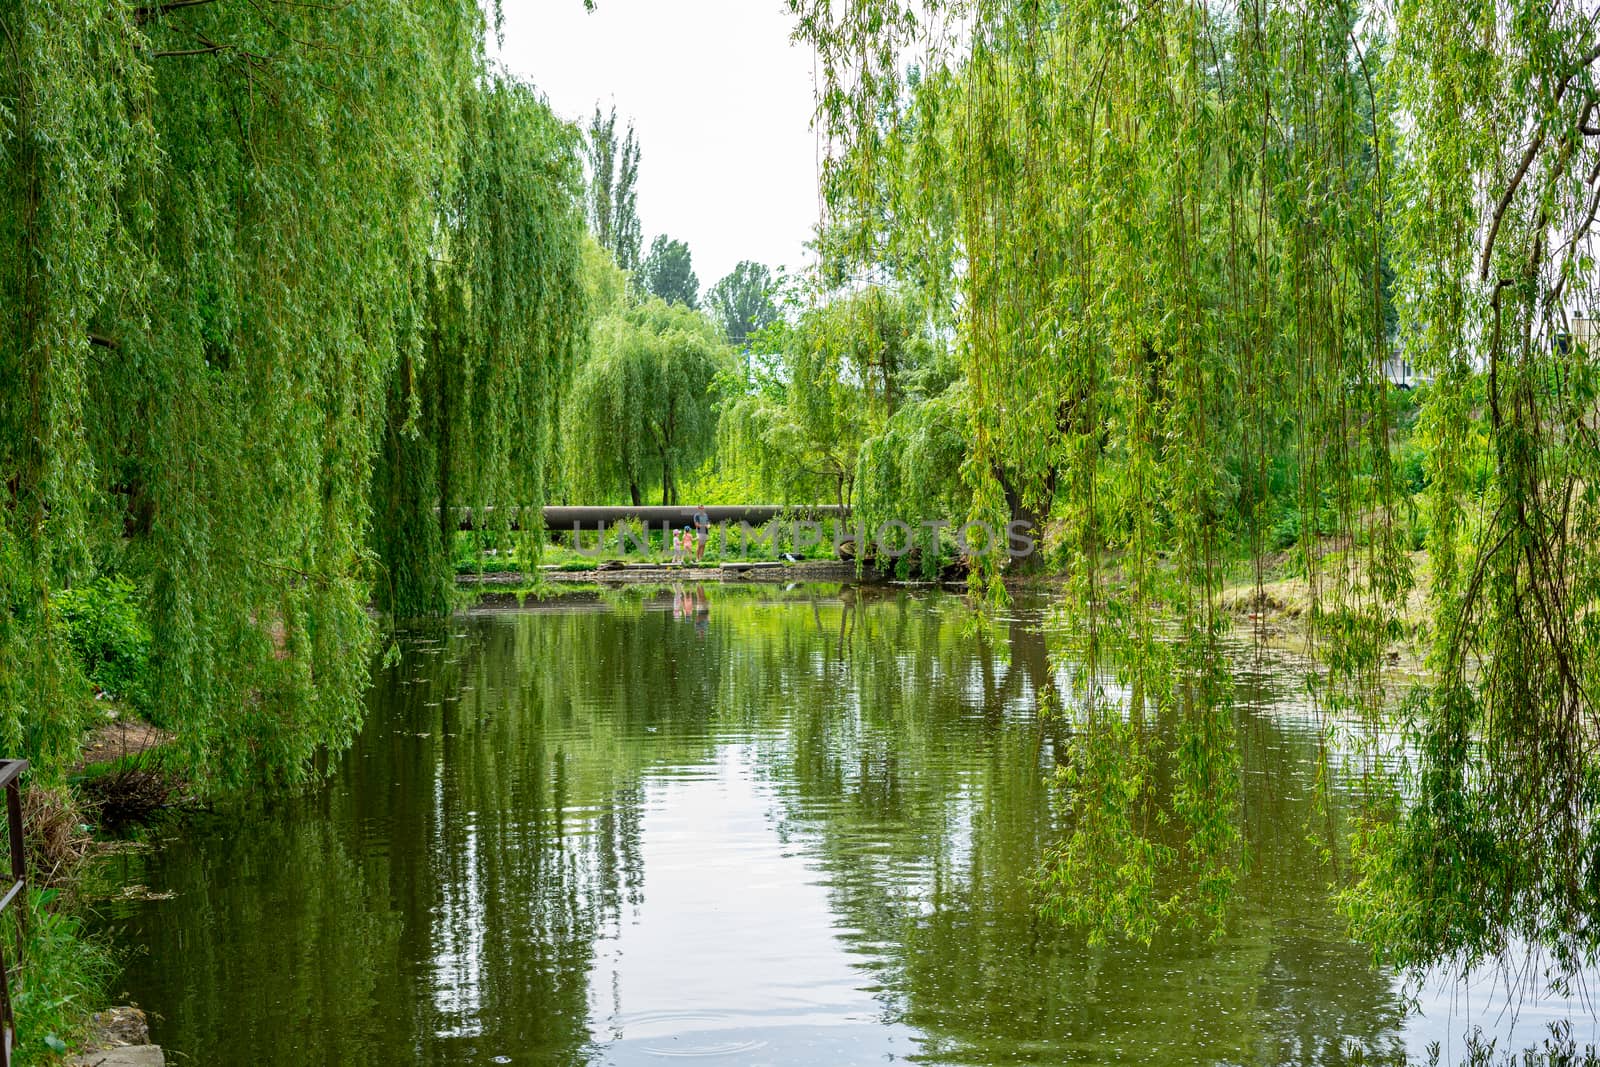 green willows grow near the river. beautiful landscape. by Serhii_Voroshchuk